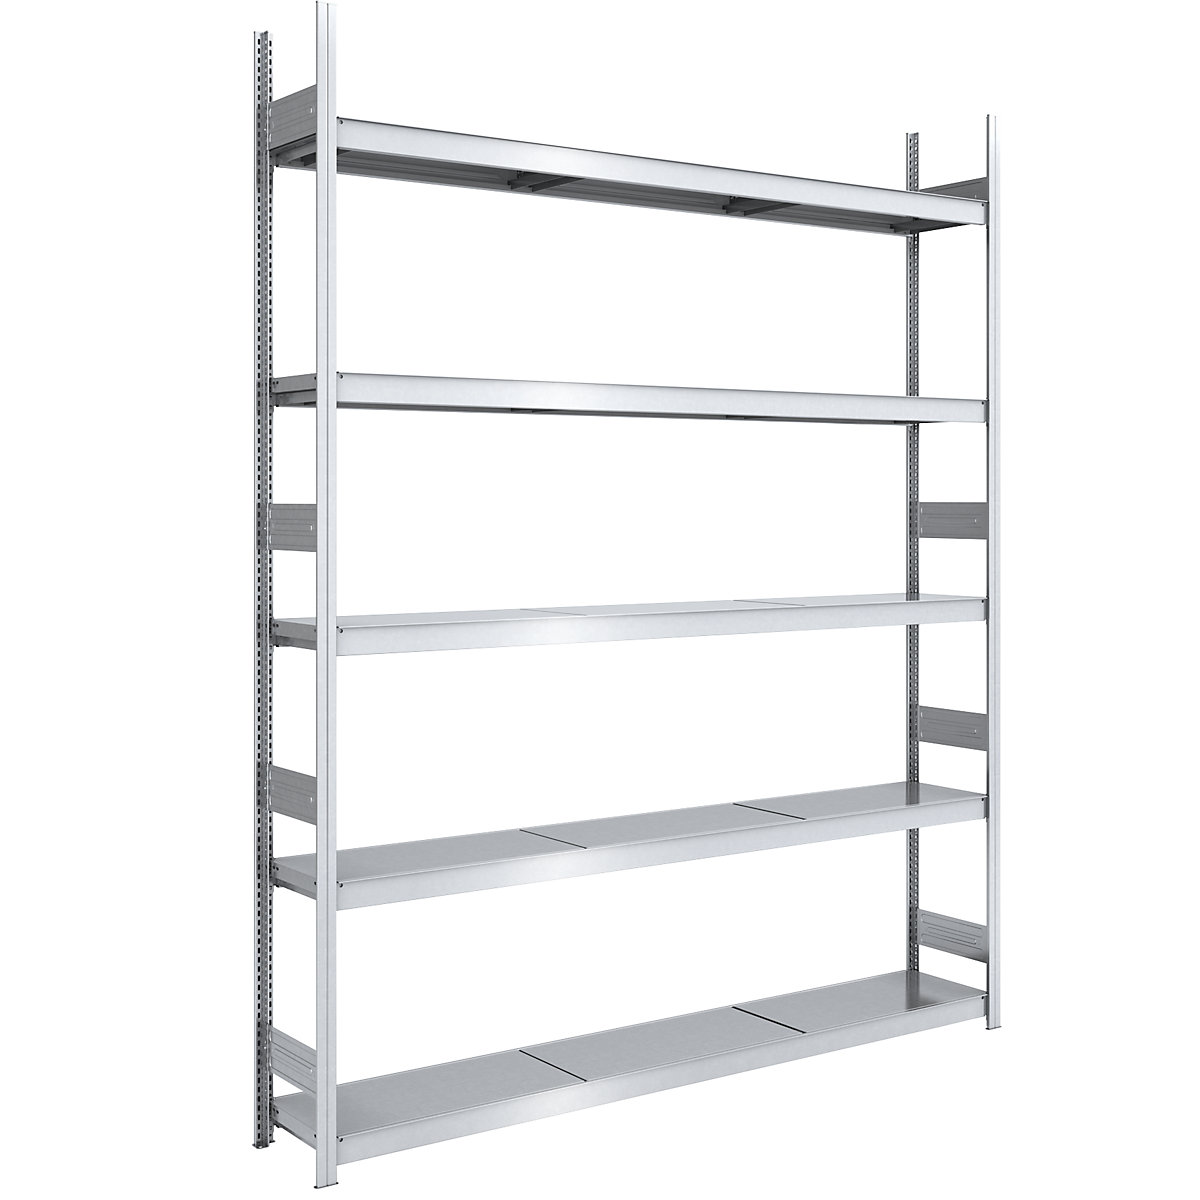 Wide span boltless shelving unit, zinc plated – hofe, shelf WxD 2250 x 400 mm, standard shelf unit, 5 steel shelves, height 3000 mm